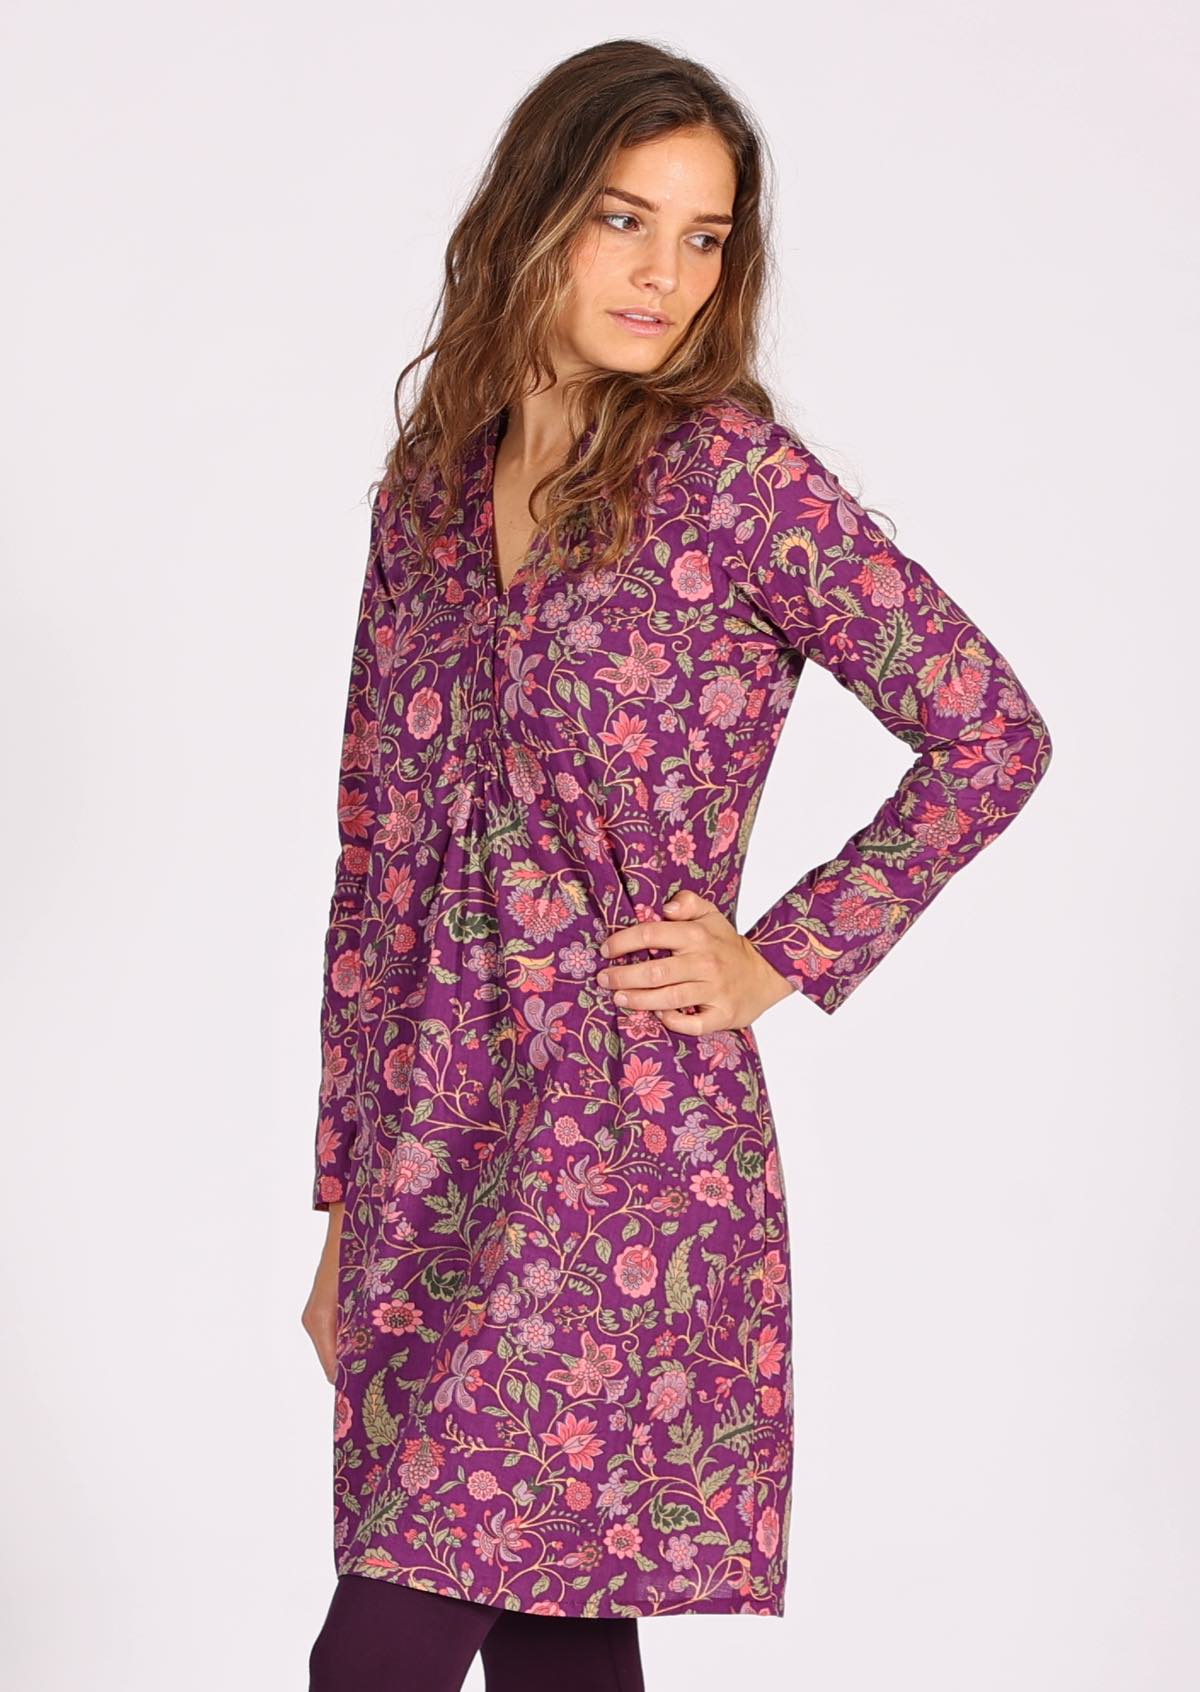 Cotton shirt dress in sweet purple floral print